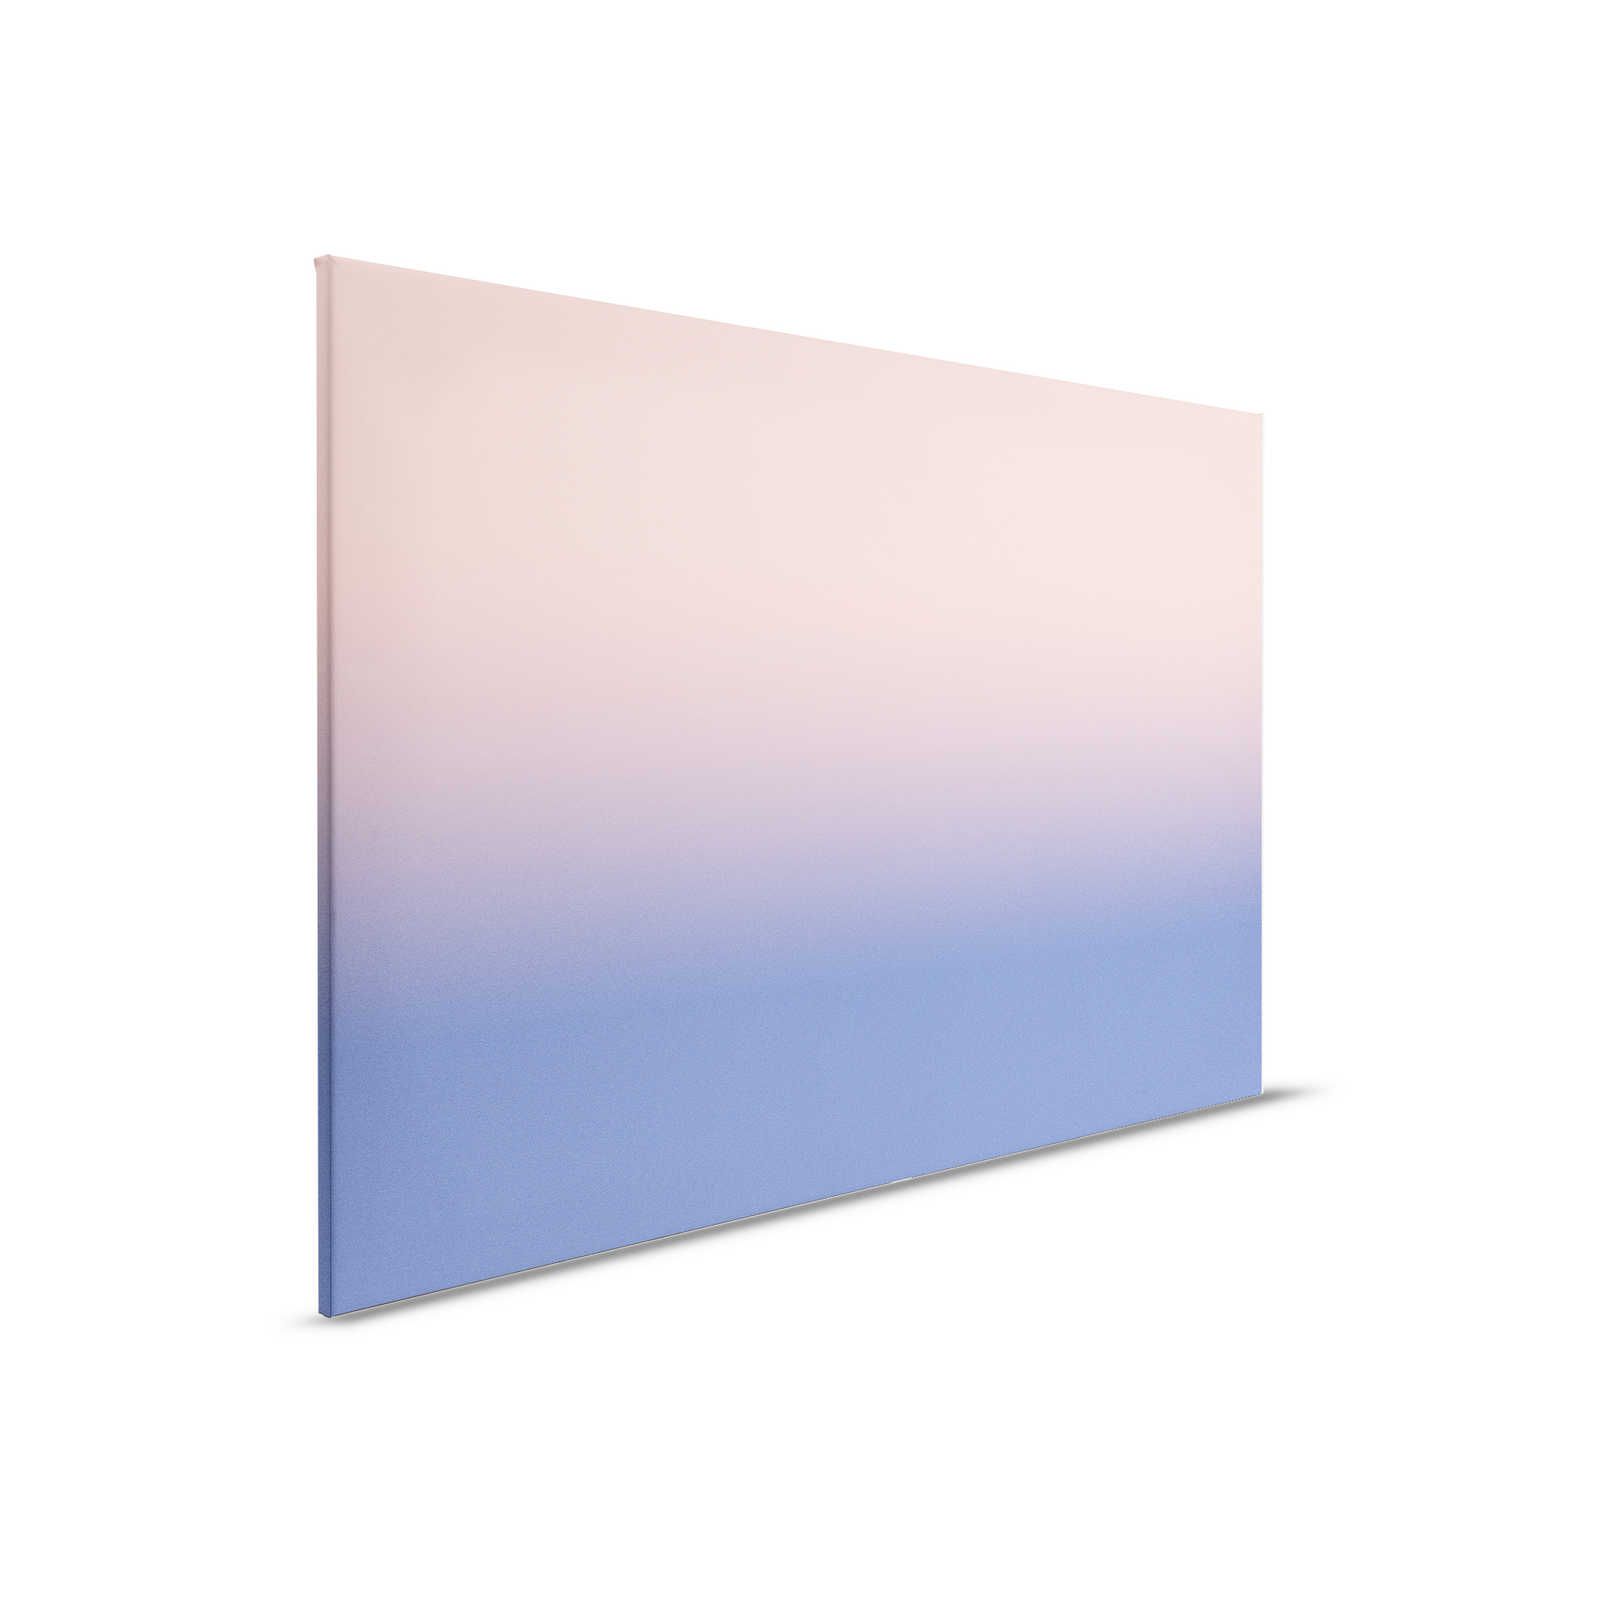         Colour Studio 2 - Ombre Leinwandbild Rosa & Lila für Mädchenzimmer – 0,90 m x 0,60 m
    